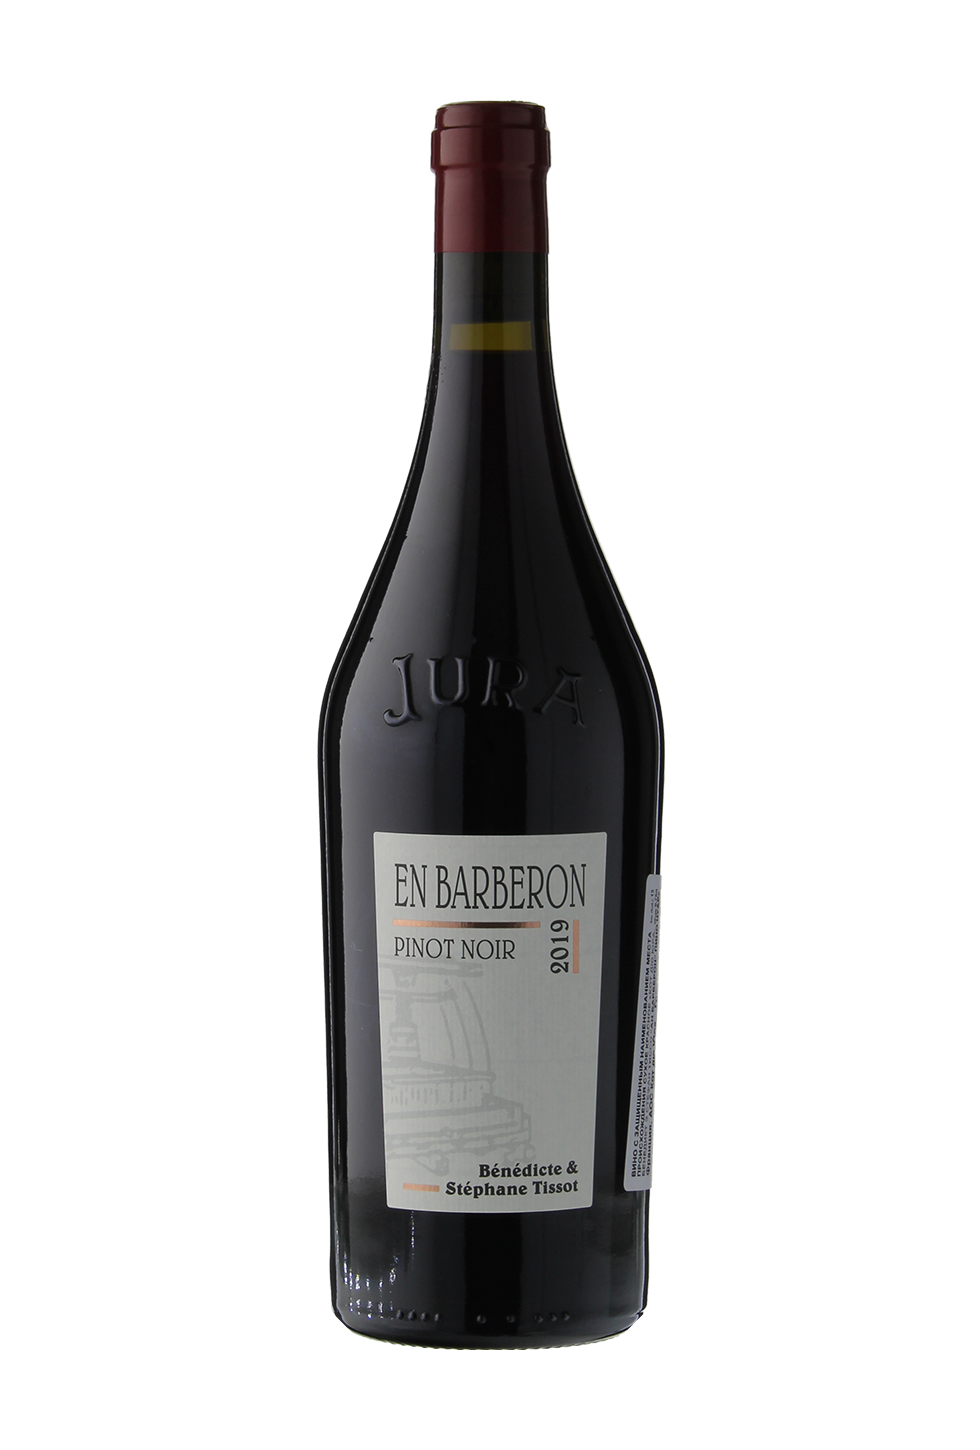 Benedicte & Stephane Tissot En Barberon Pinot Noir Cotes du Jura AOC